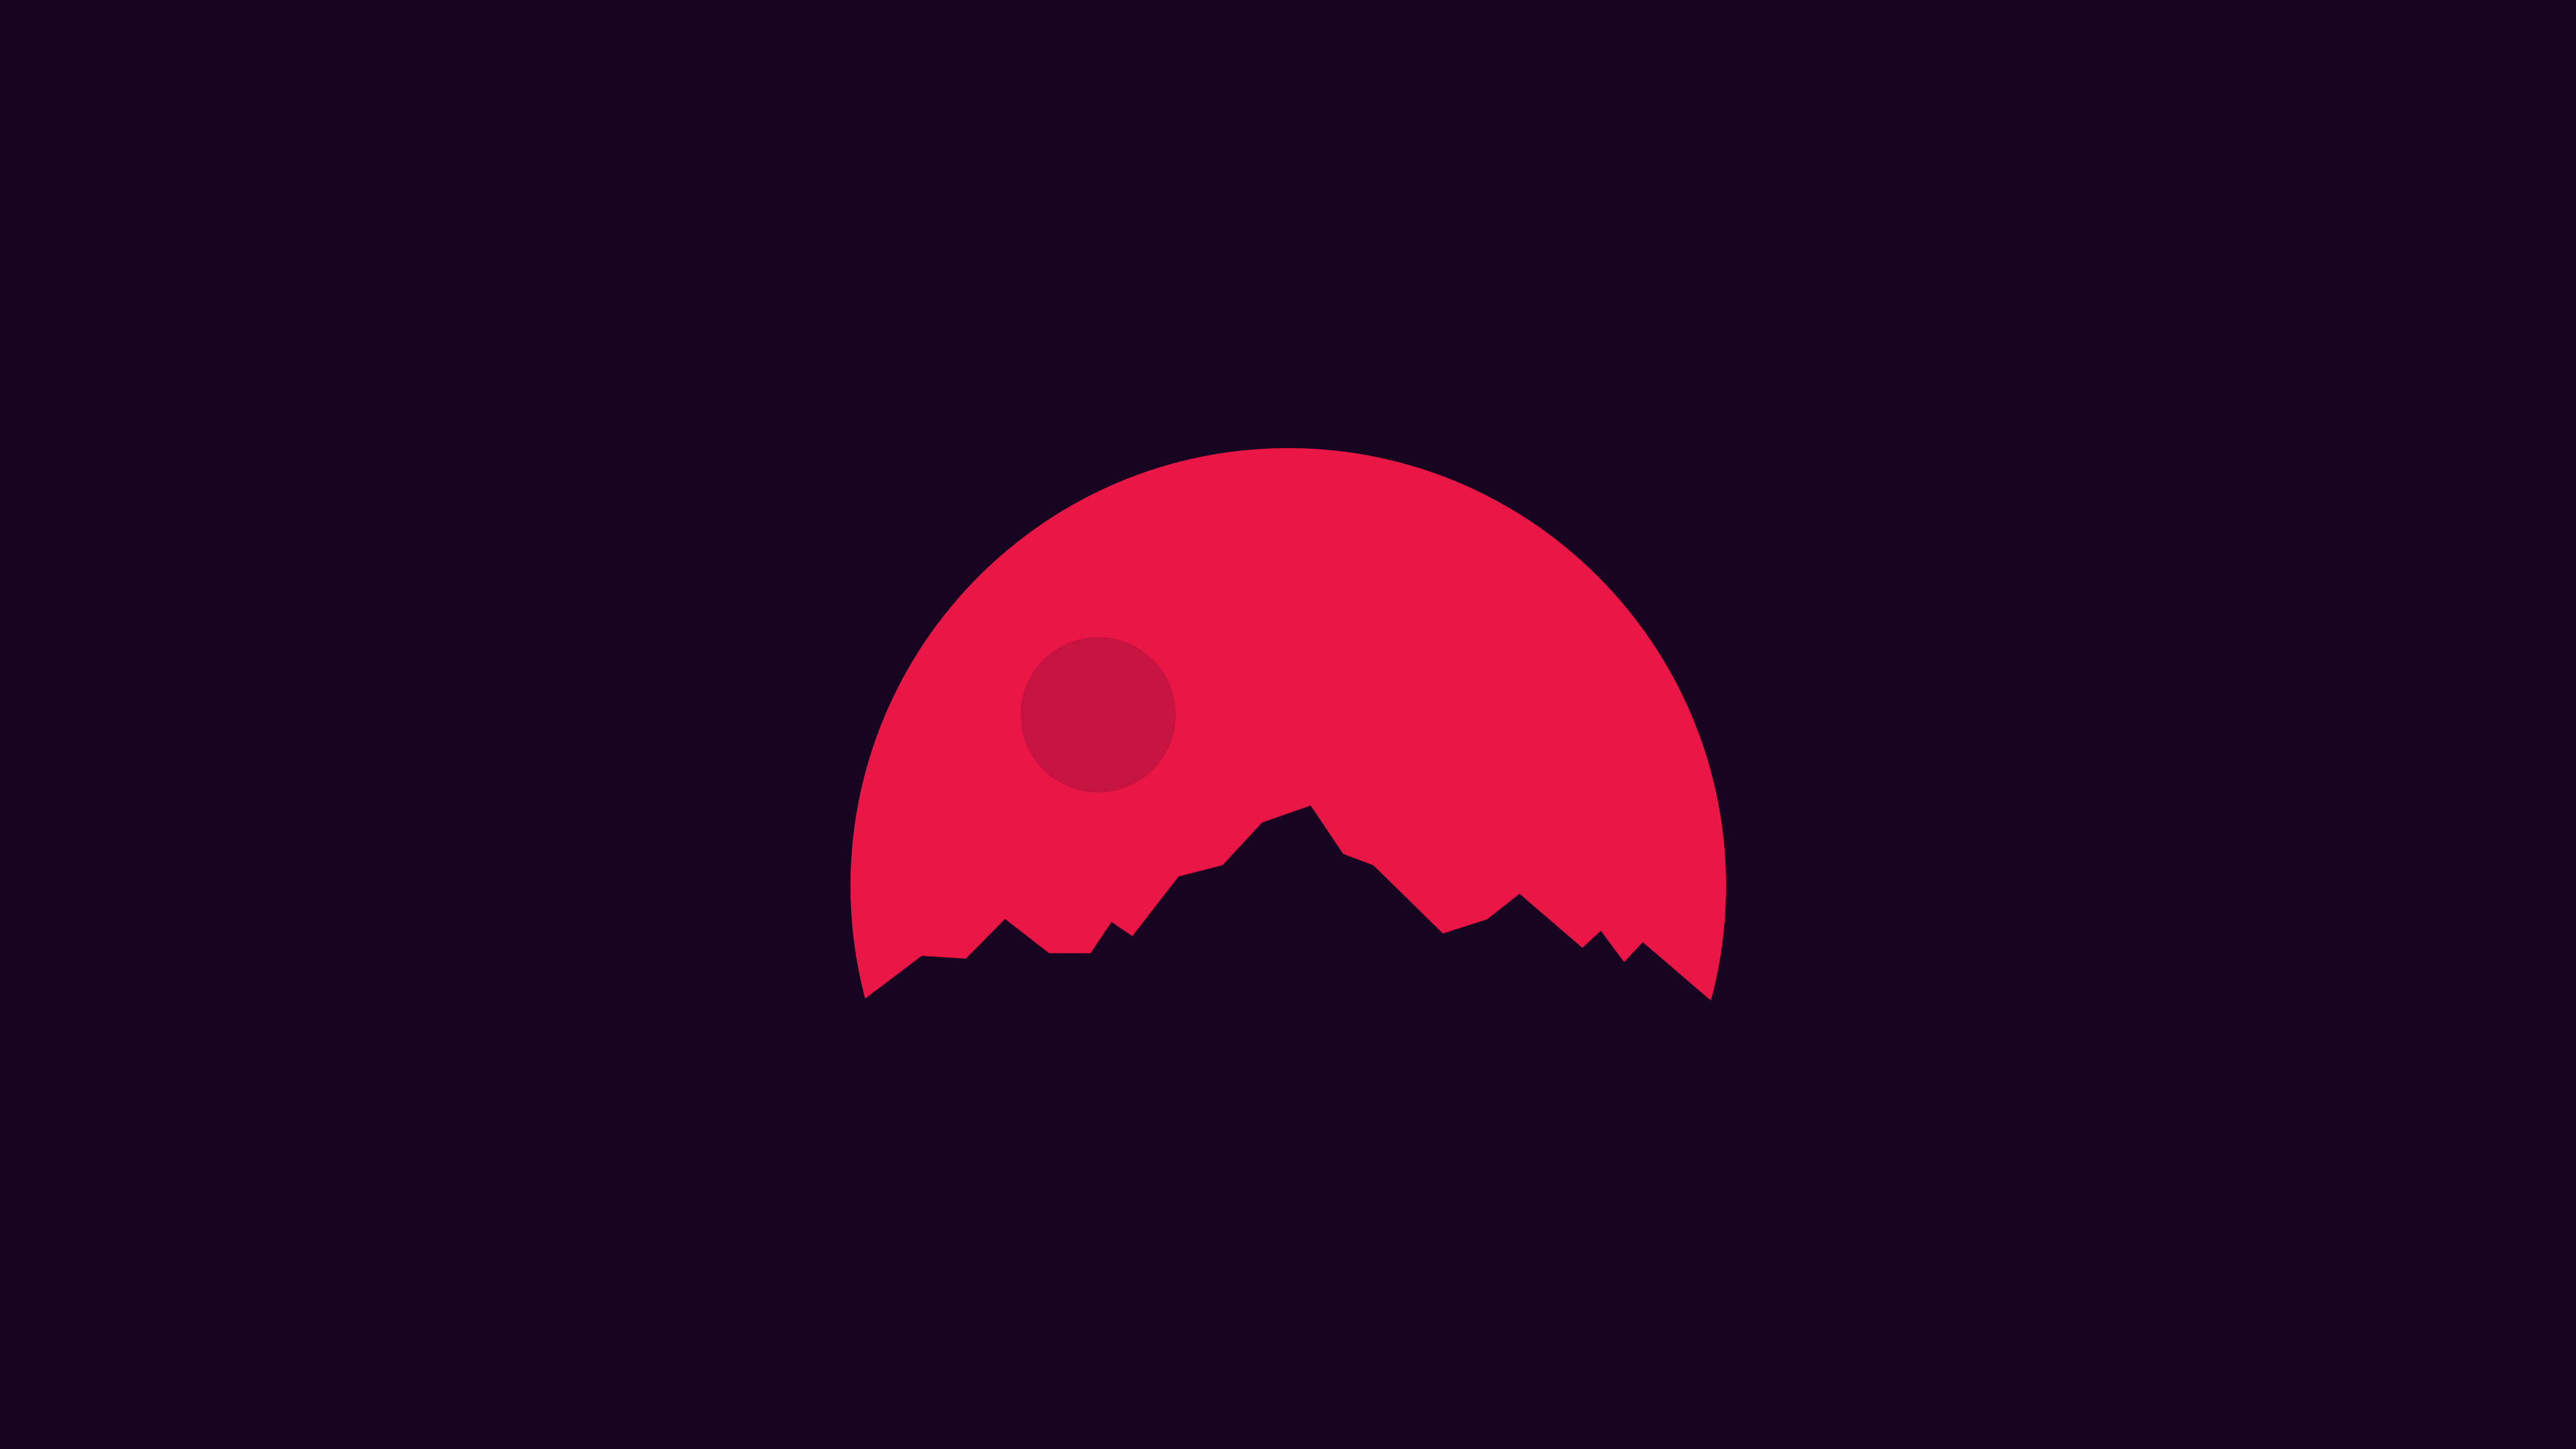 General 3840x2160 mountains minimalism red. Minimalist desktop